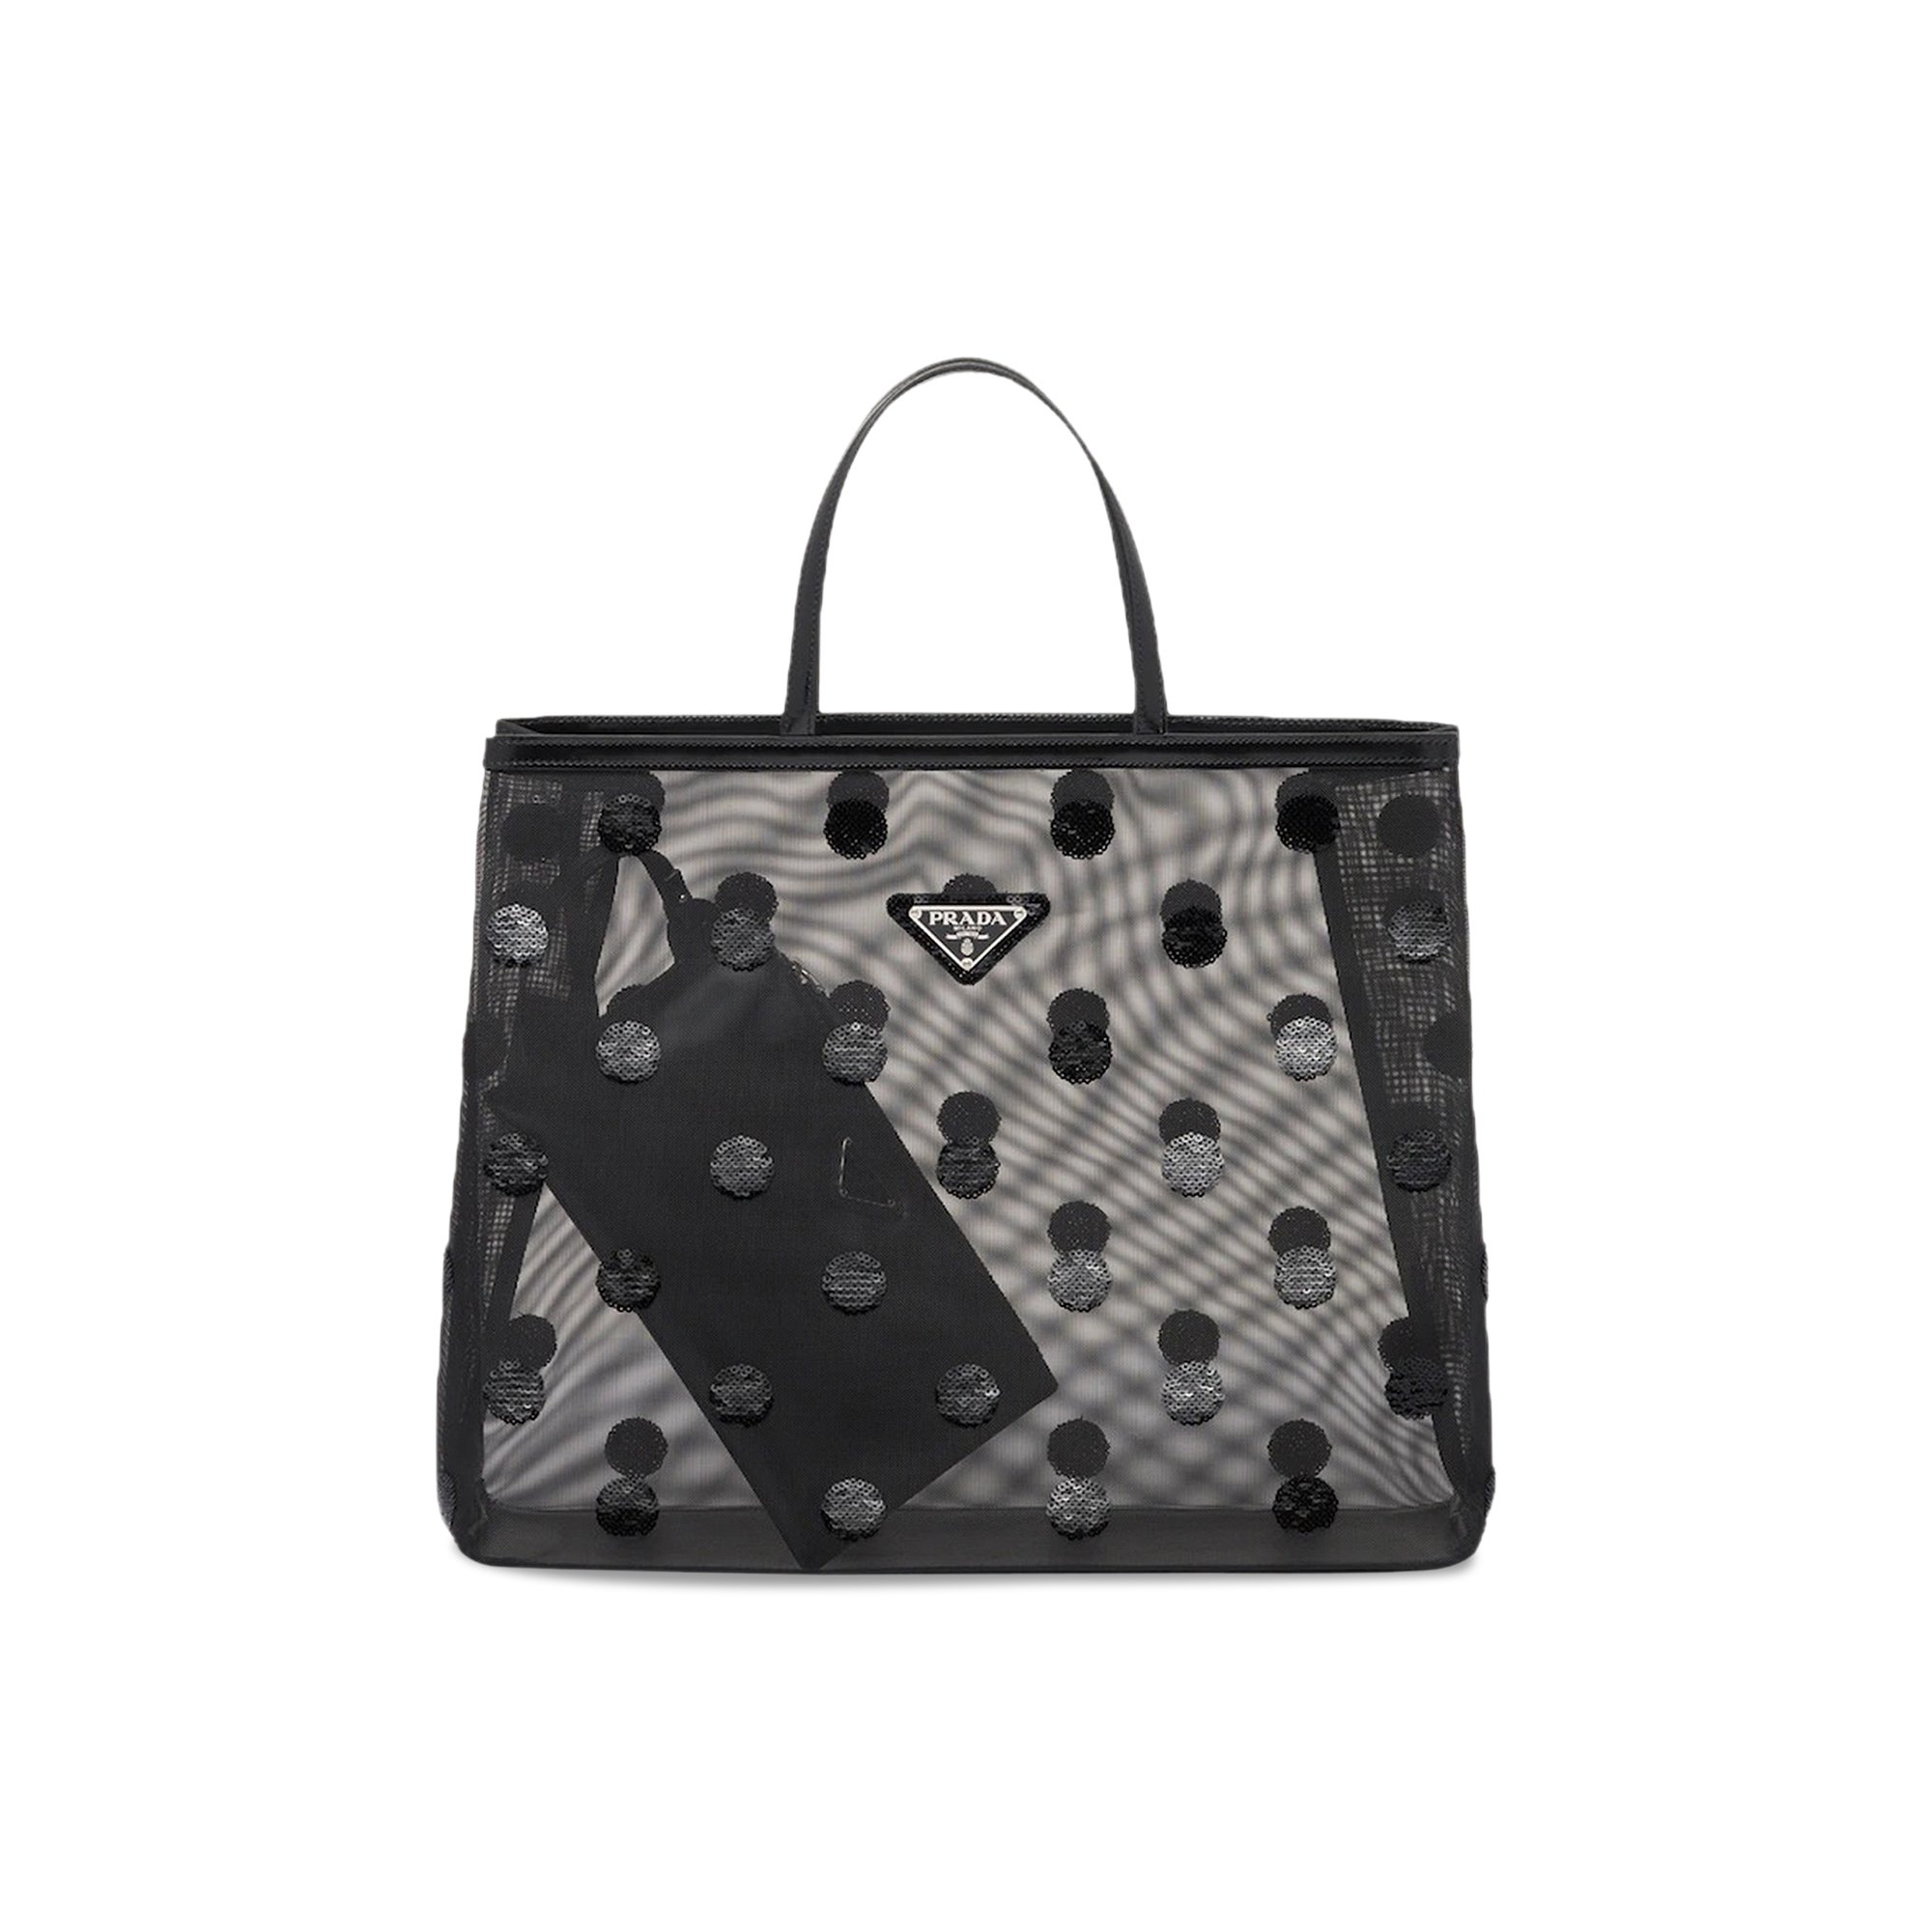 Buy Prada Sequined Mesh Tote Bag 'Black' - 1BG416 2DZ8 F0002 | GOAT